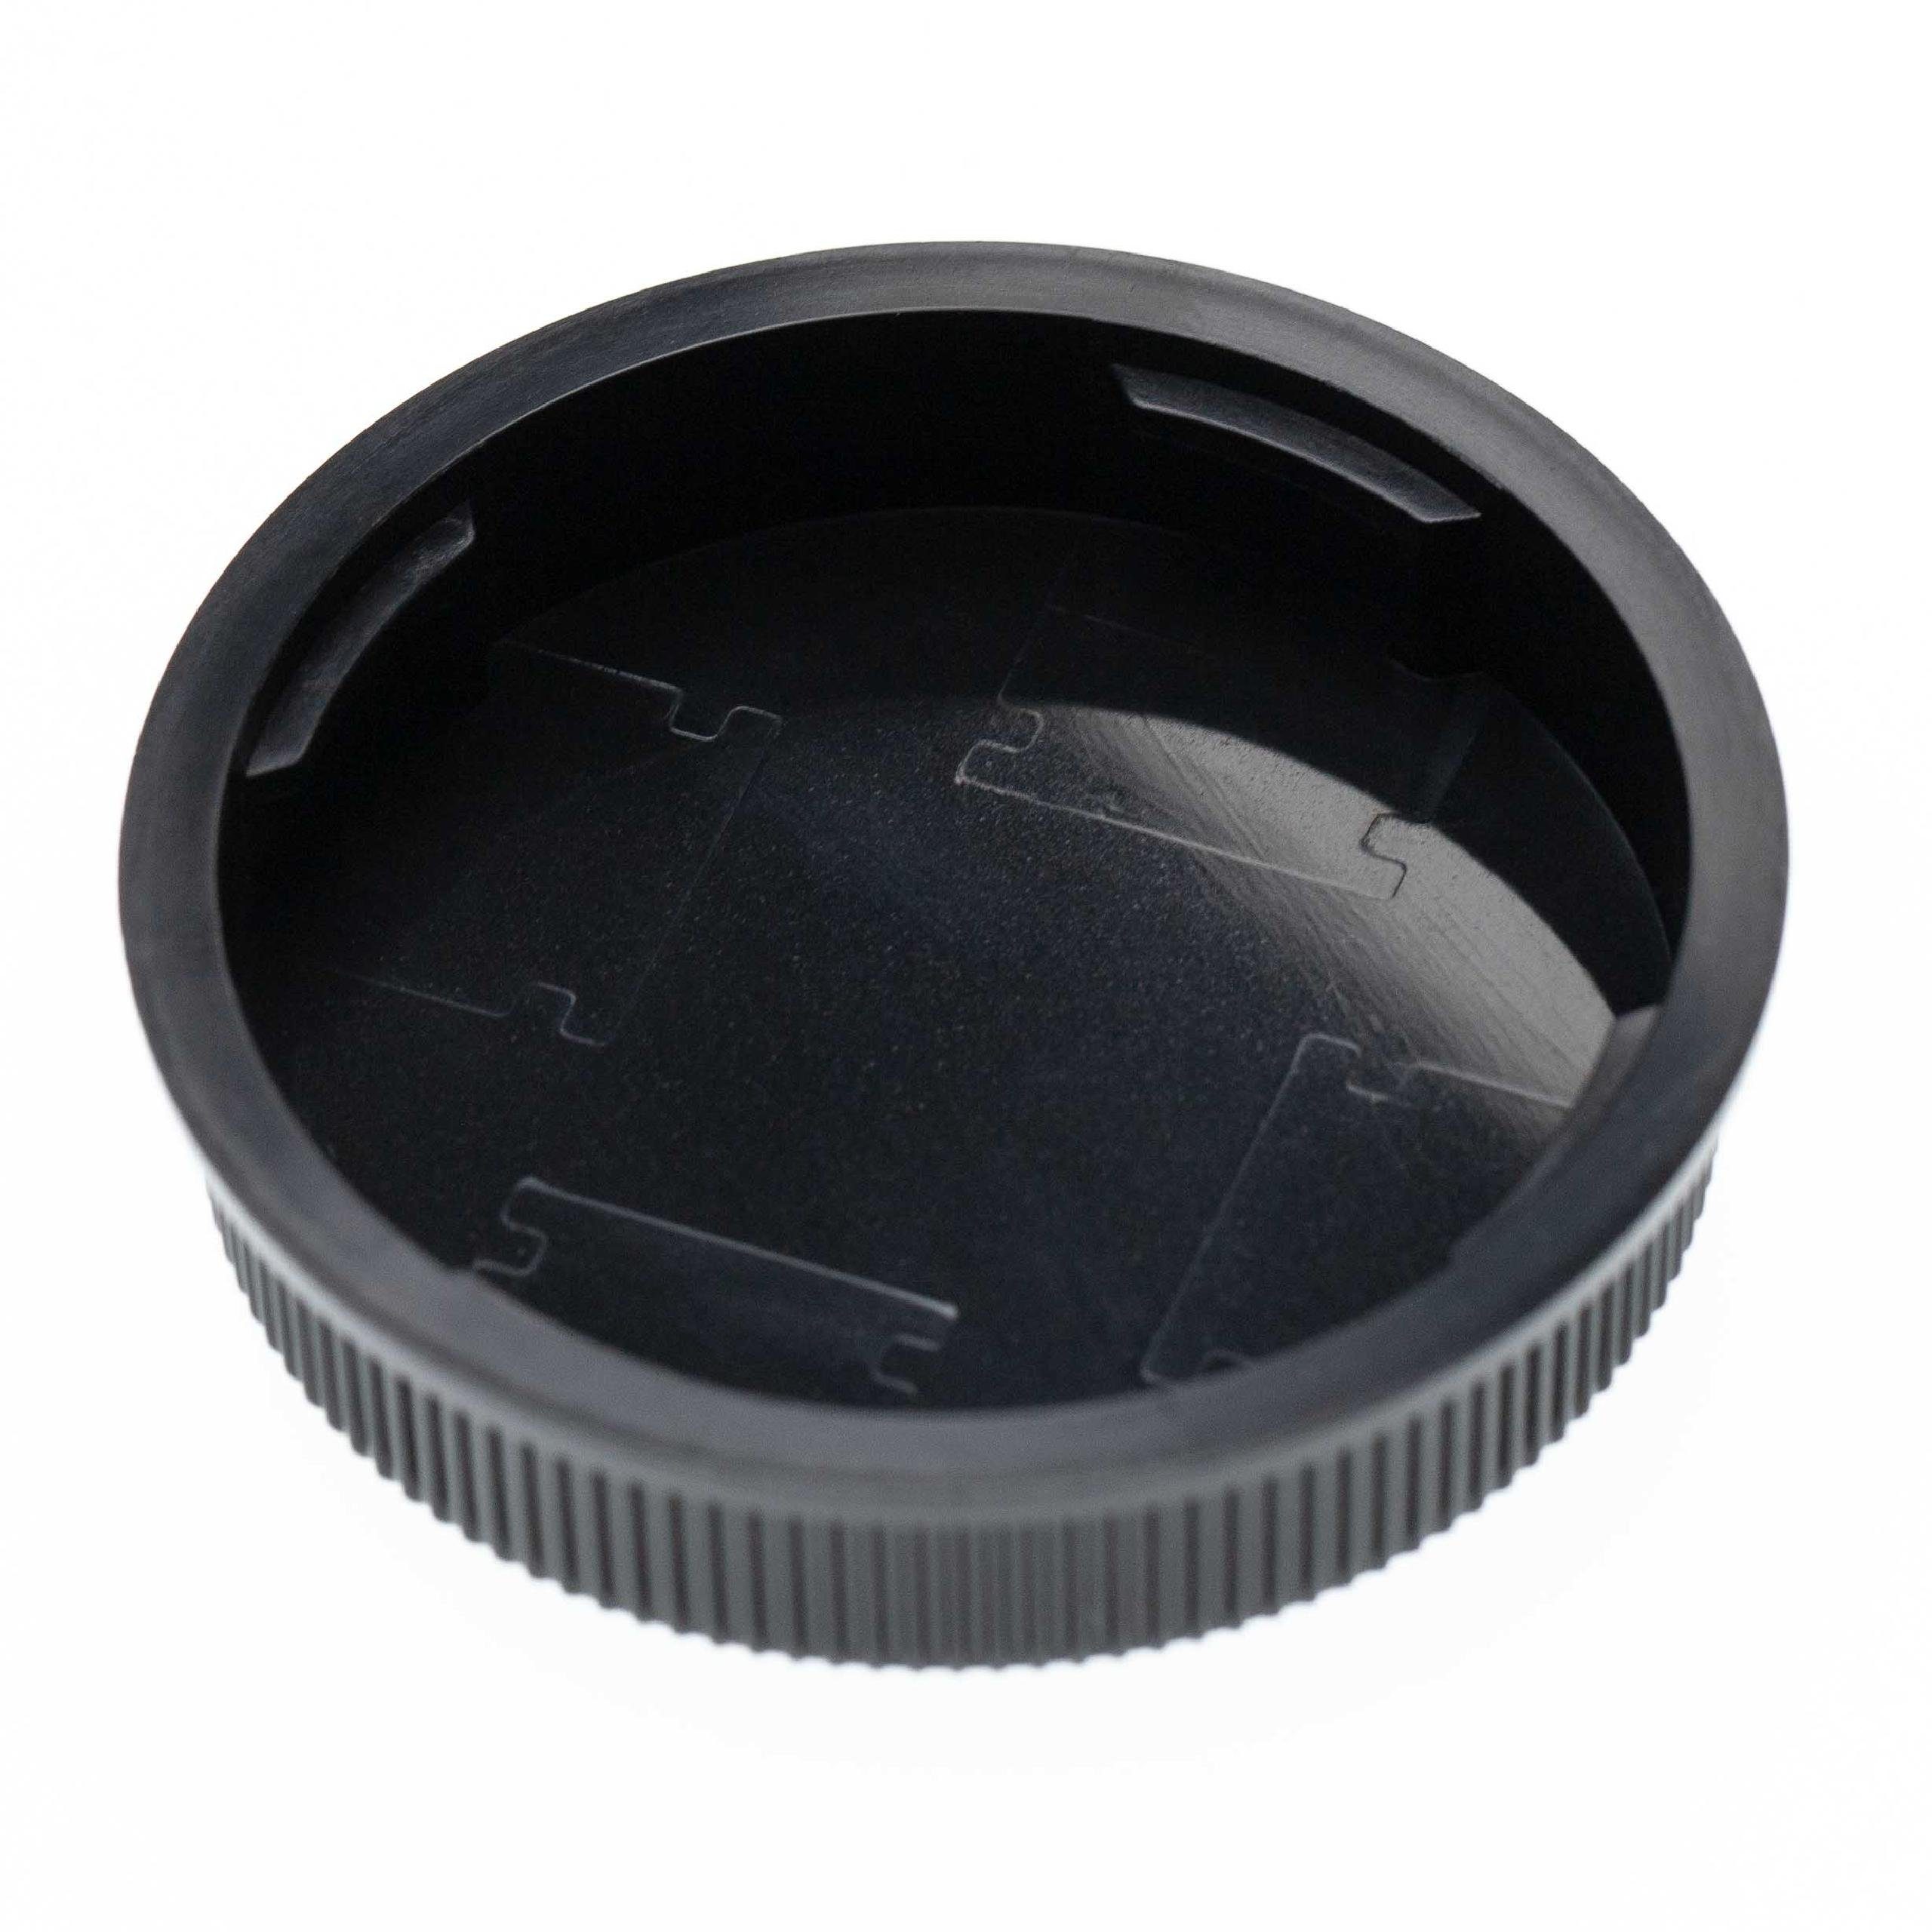 vhbw Objektivrückdeckel passend für Leica CL (2017), SL (Typ 601), T (Typ 701), TL, TL2 Kamera